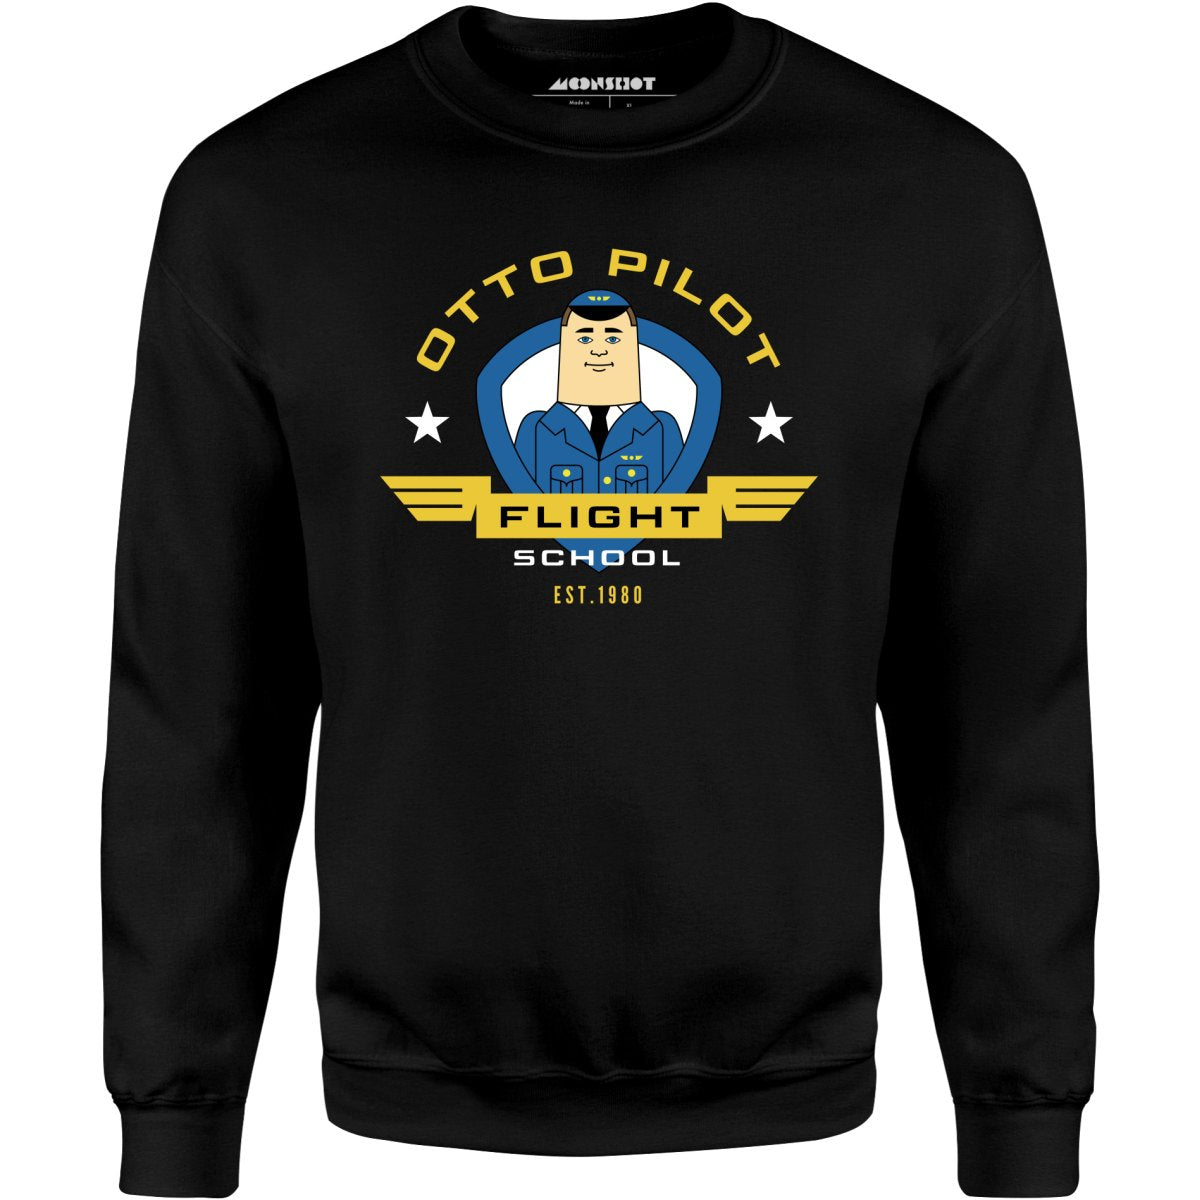 Otto Pilot Flight School - Unisex Sweatshirt